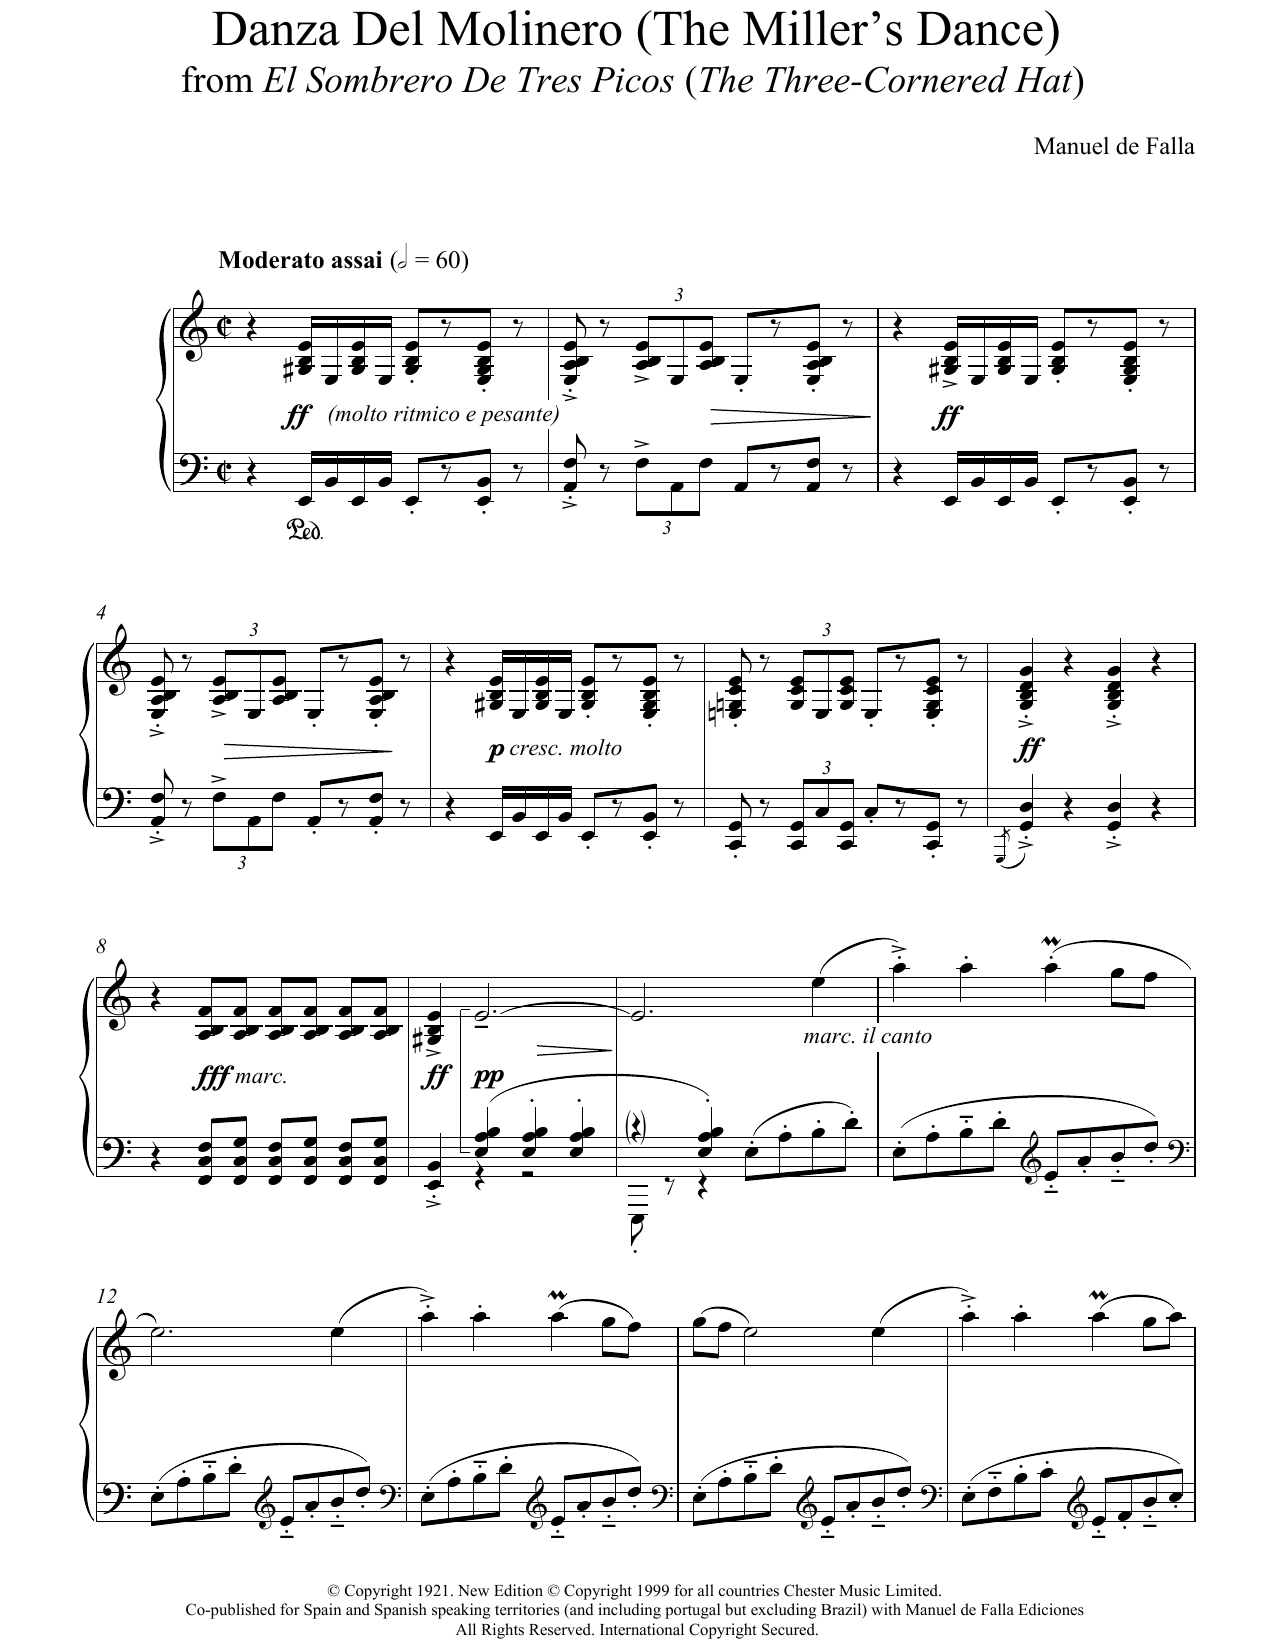 Manuel De Falla Danza Del Molinero ('The Miller's Dance') (From El Sombrero De Tres Picos ('The Three-Cornered Hat') sheet music notes and chords arranged for Piano Solo